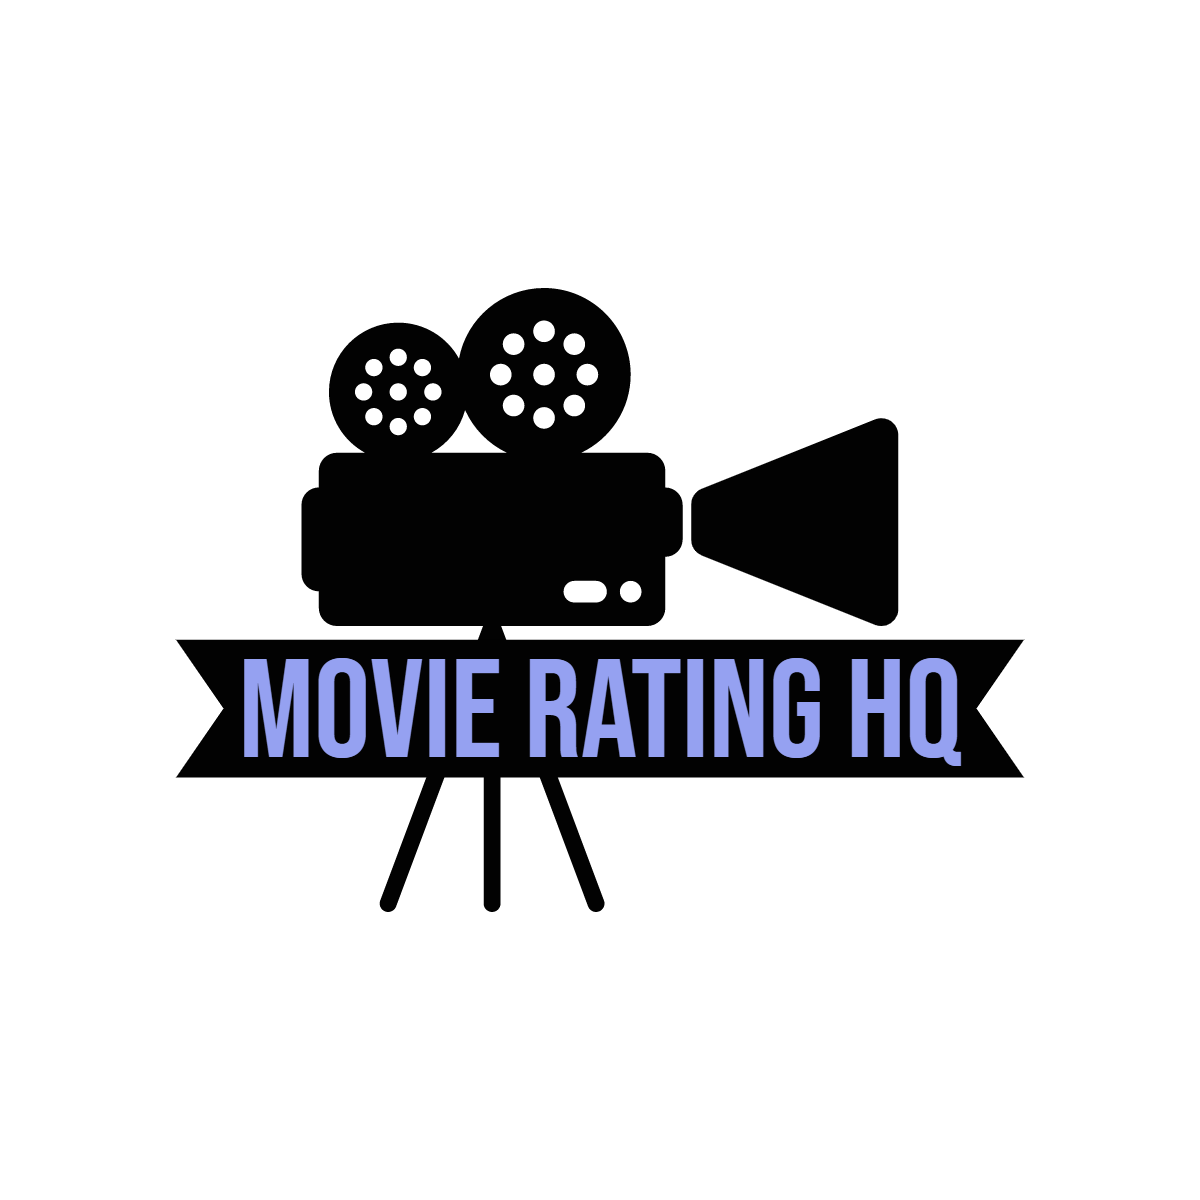 Movie Ratings HQ Logo: Film Camera